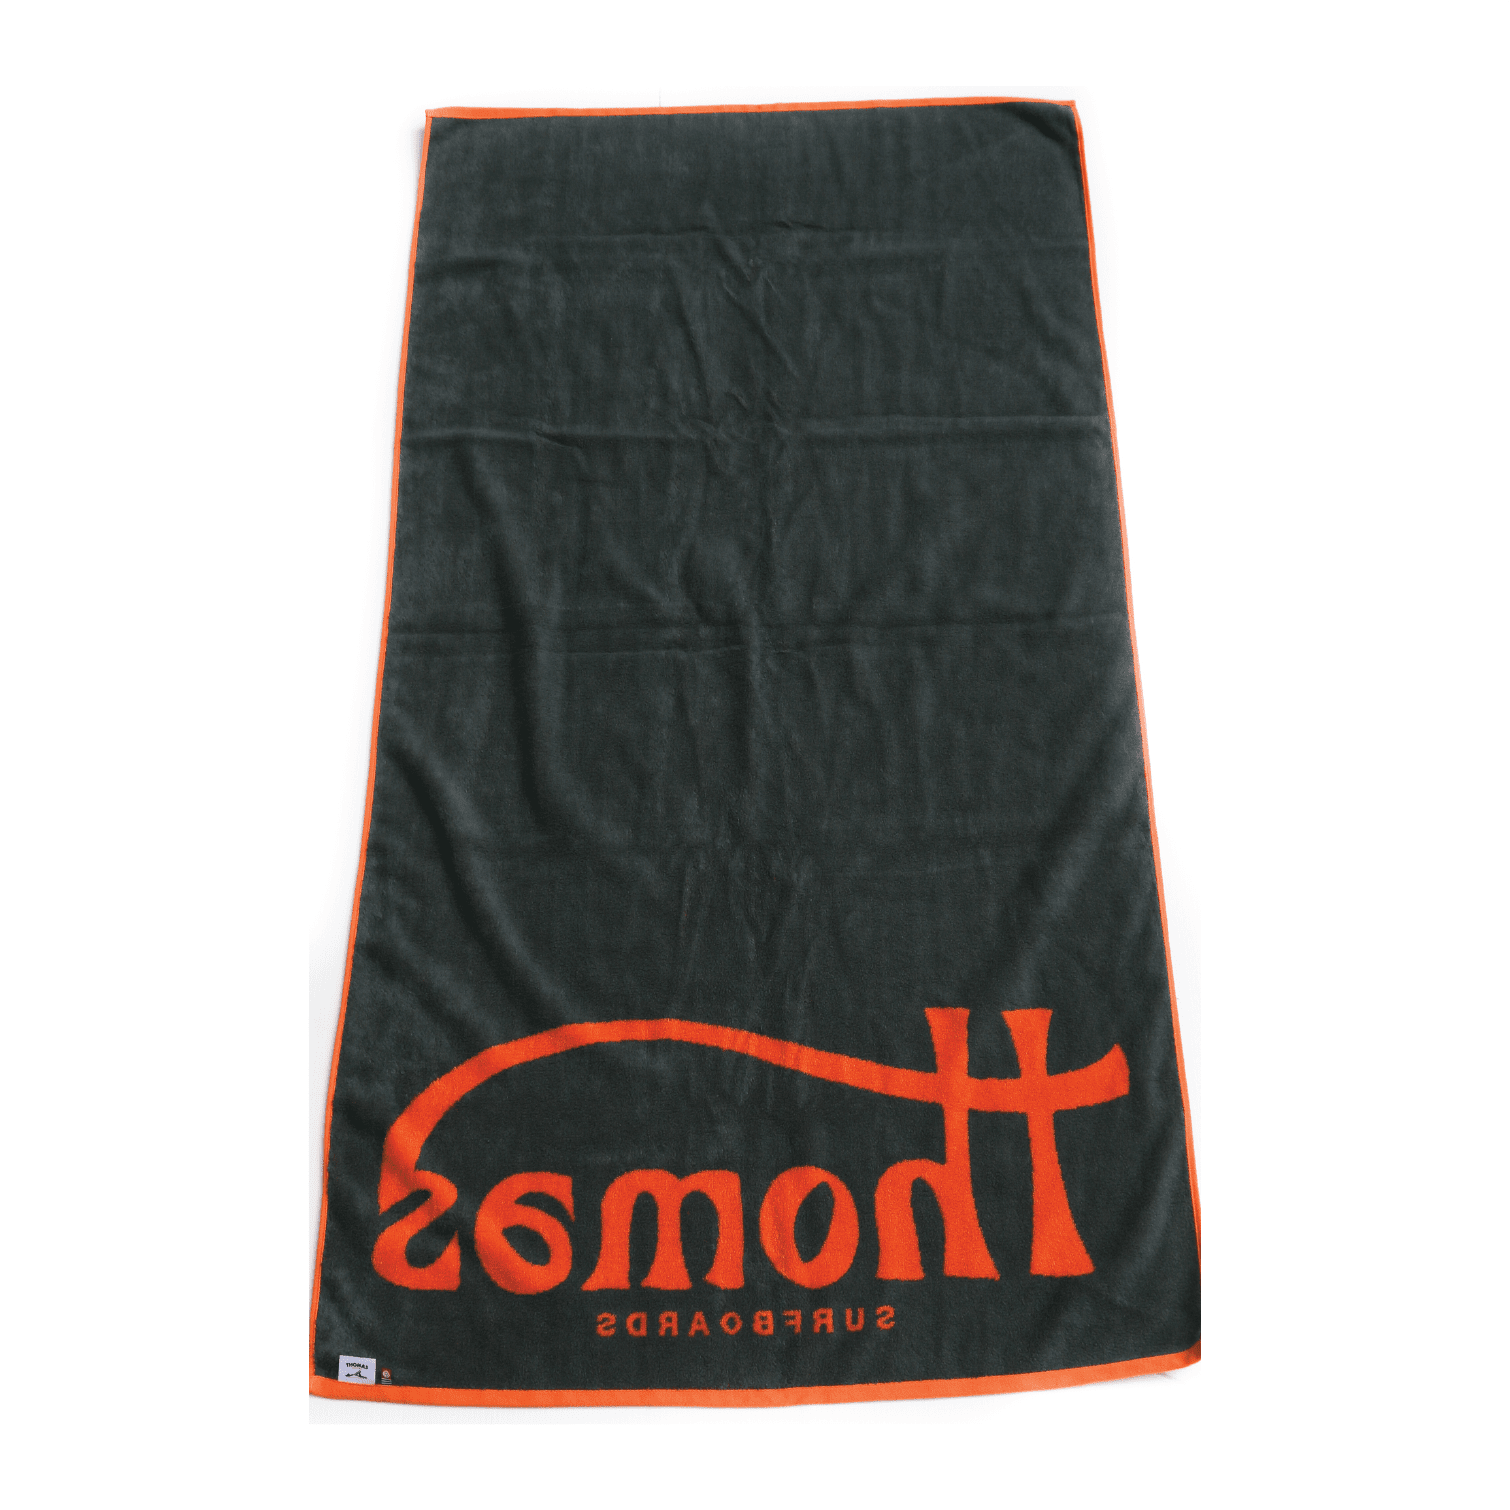 Thomas x Imabari Towel - McNeil Orange